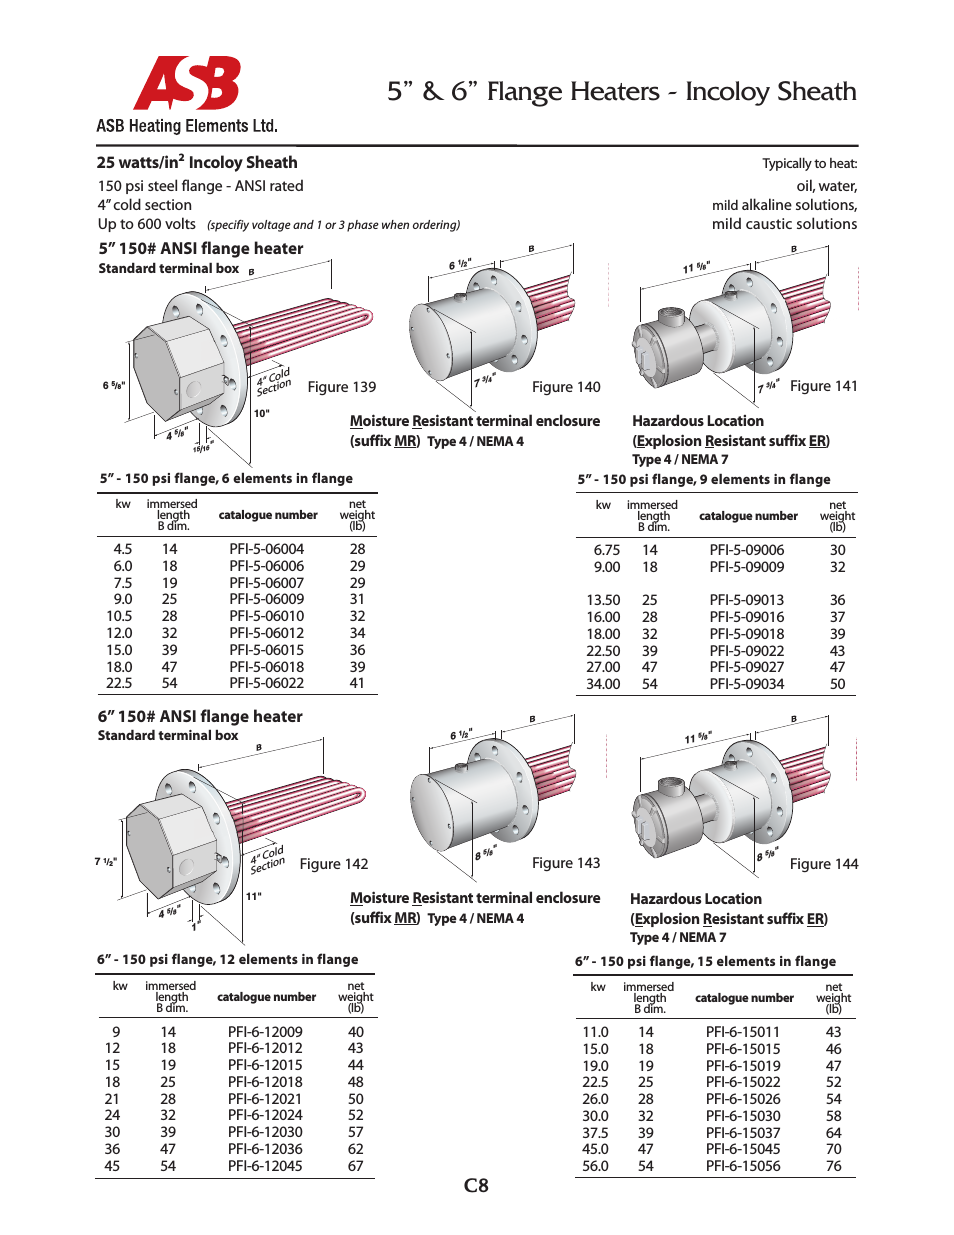 5” & 6” Flange Heaters - 25 watts - Incoloy Sheath